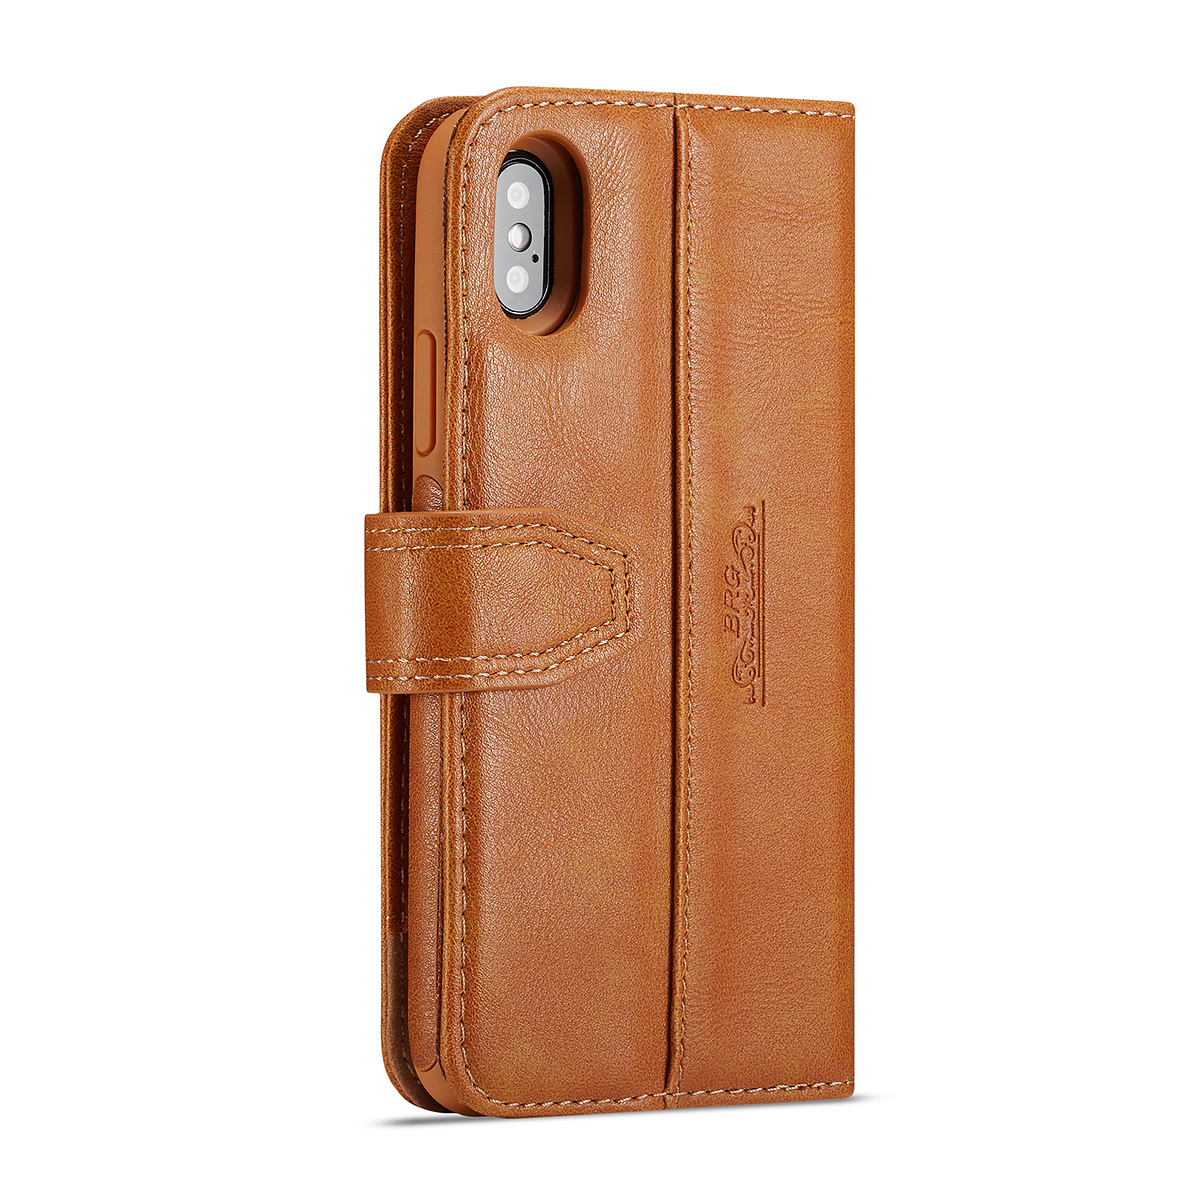 BRG Luxury plånboksfodral med ställ, iPhone X/XS, brun